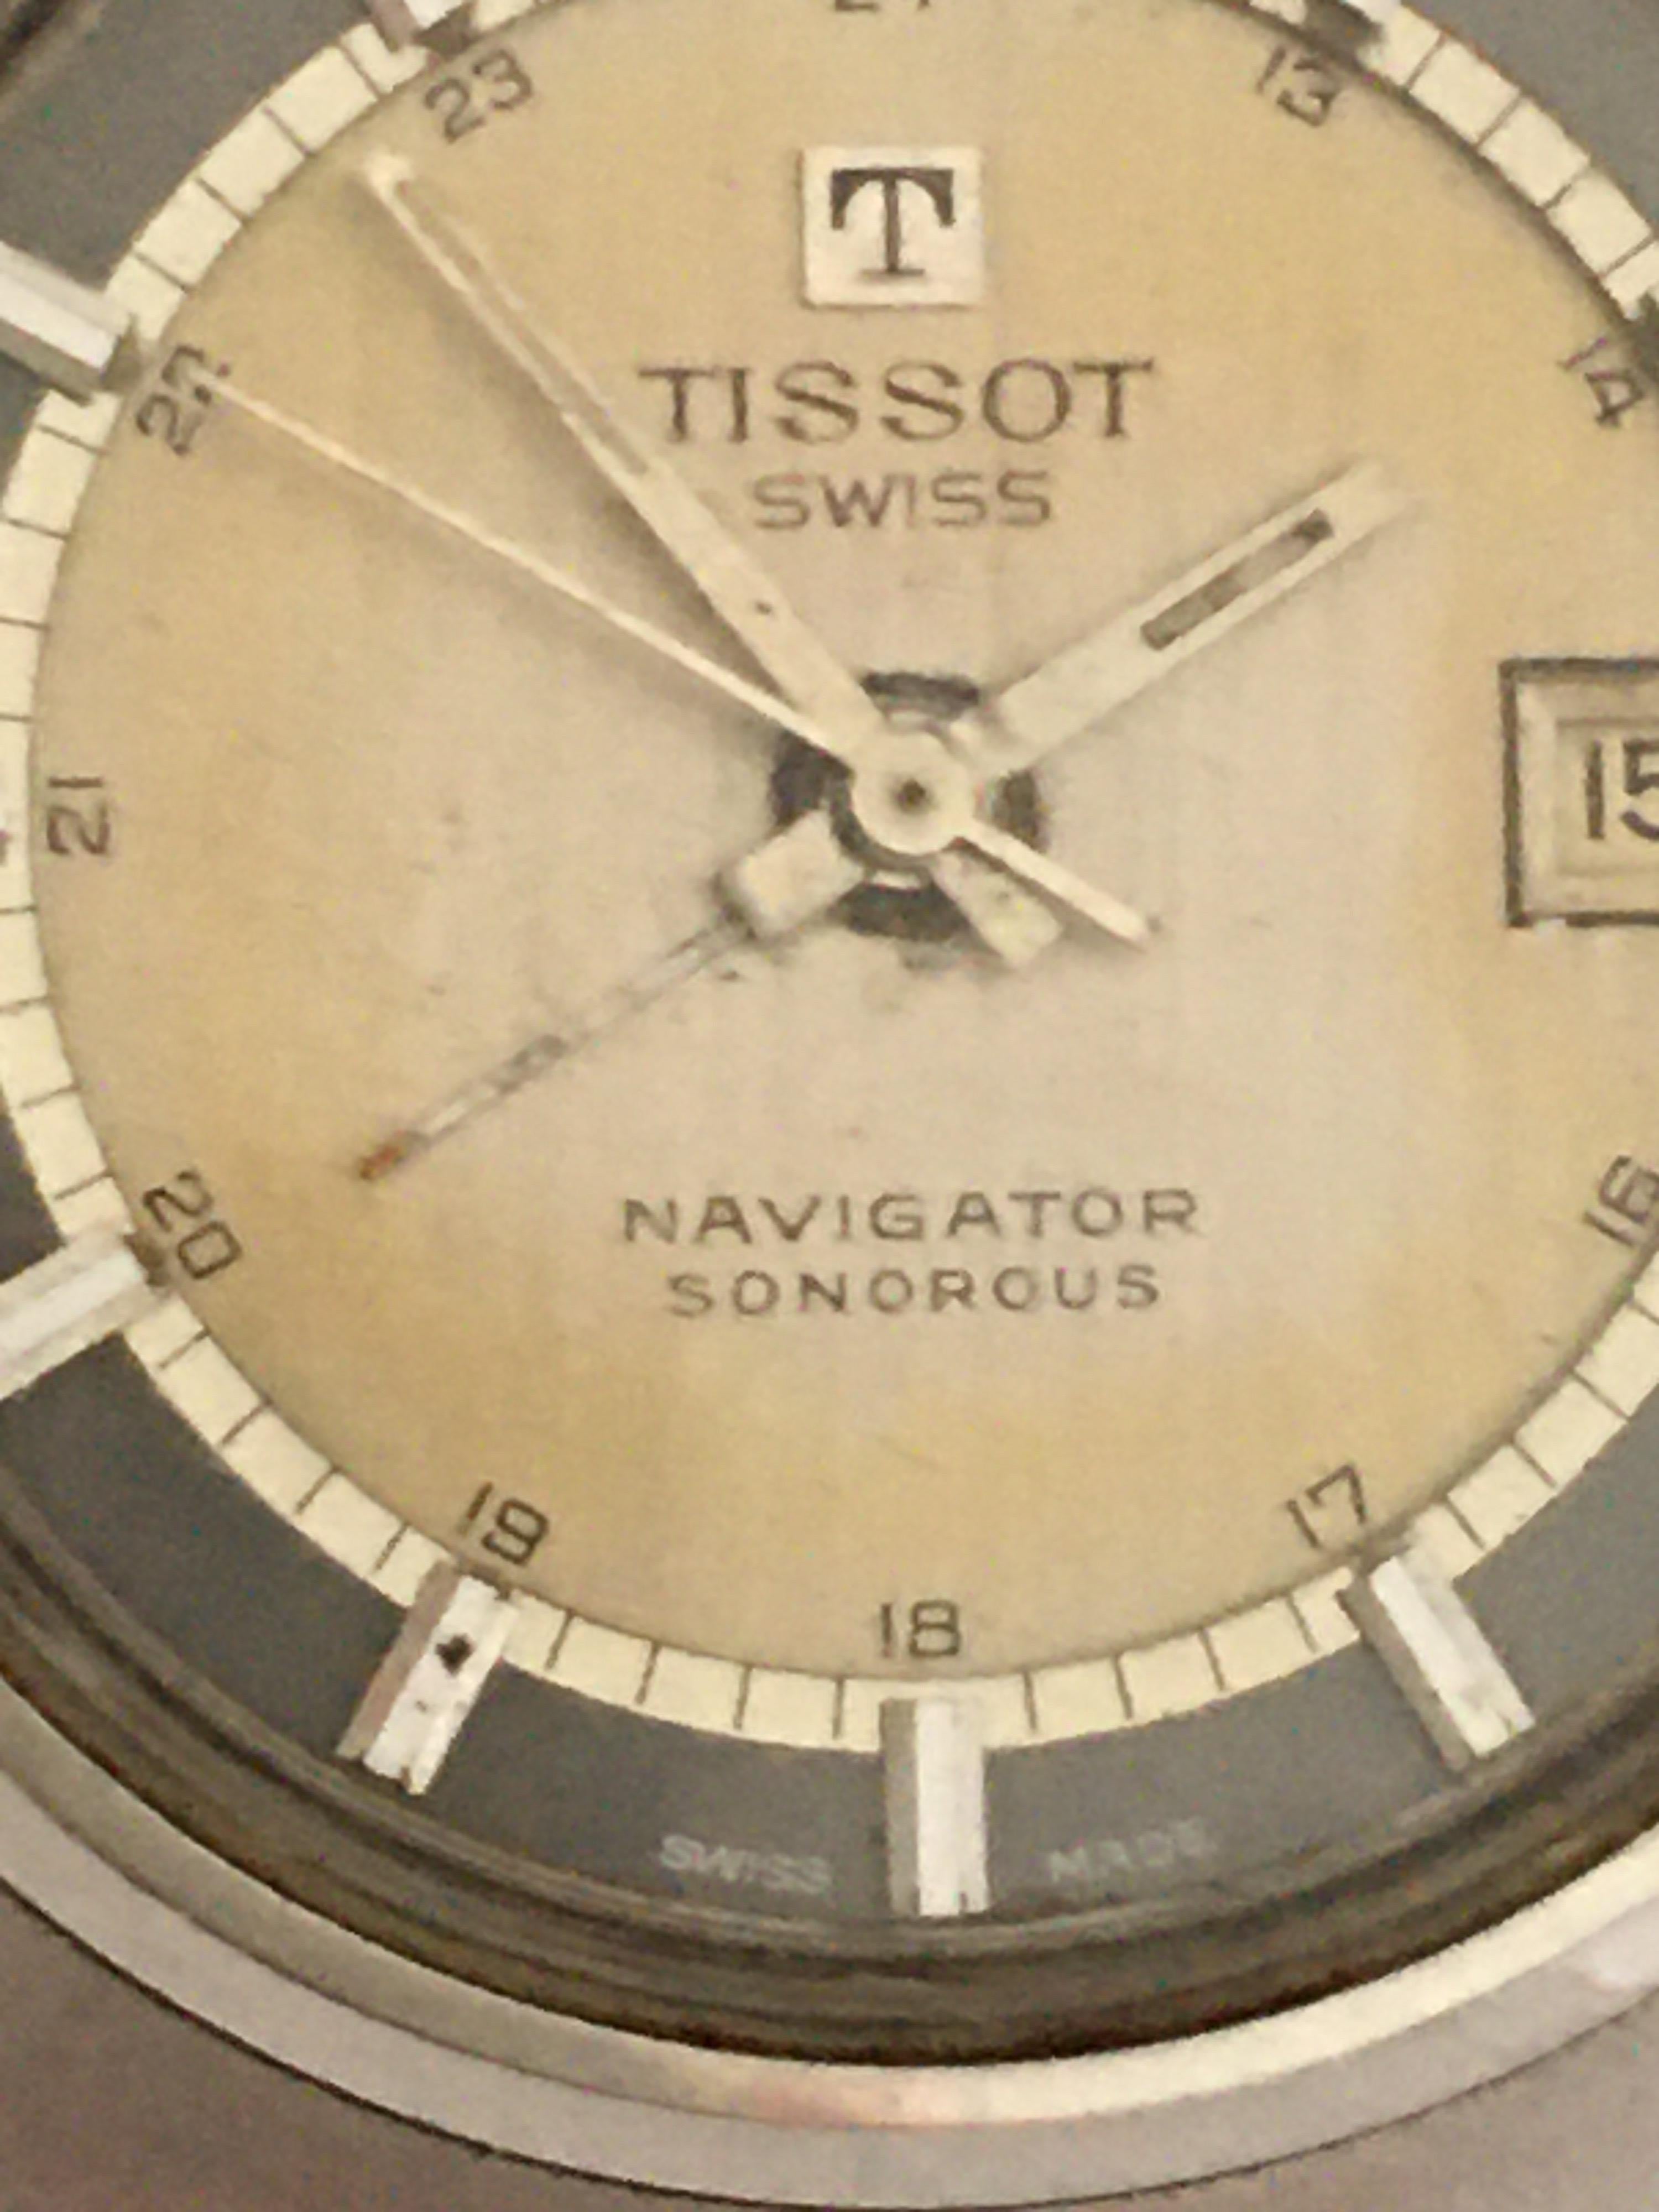 Vintage 1970s Stainless Steel Tissot Swiss Navigator Sonorous Alarm Watch 7